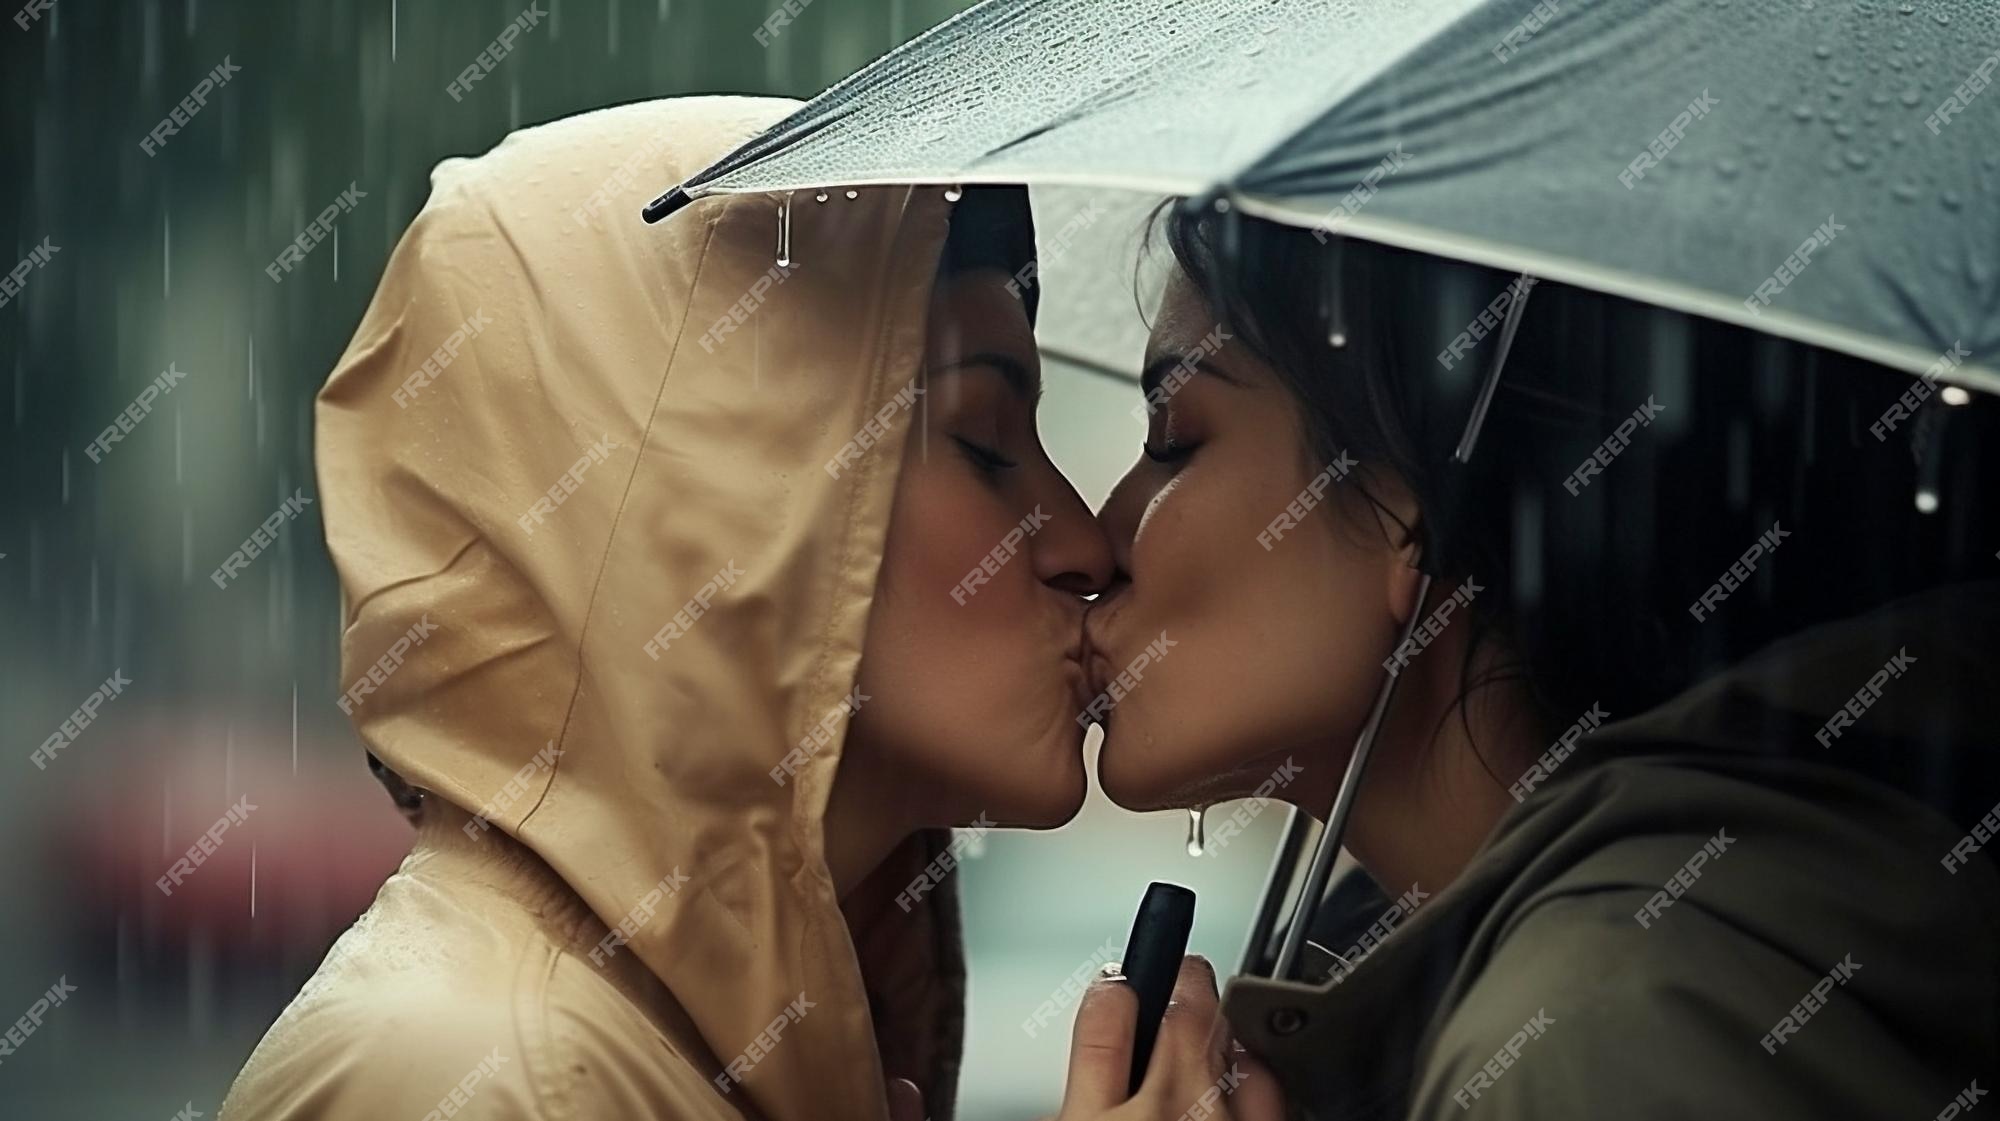 caroline geto add teen lesbian kissing videos photo